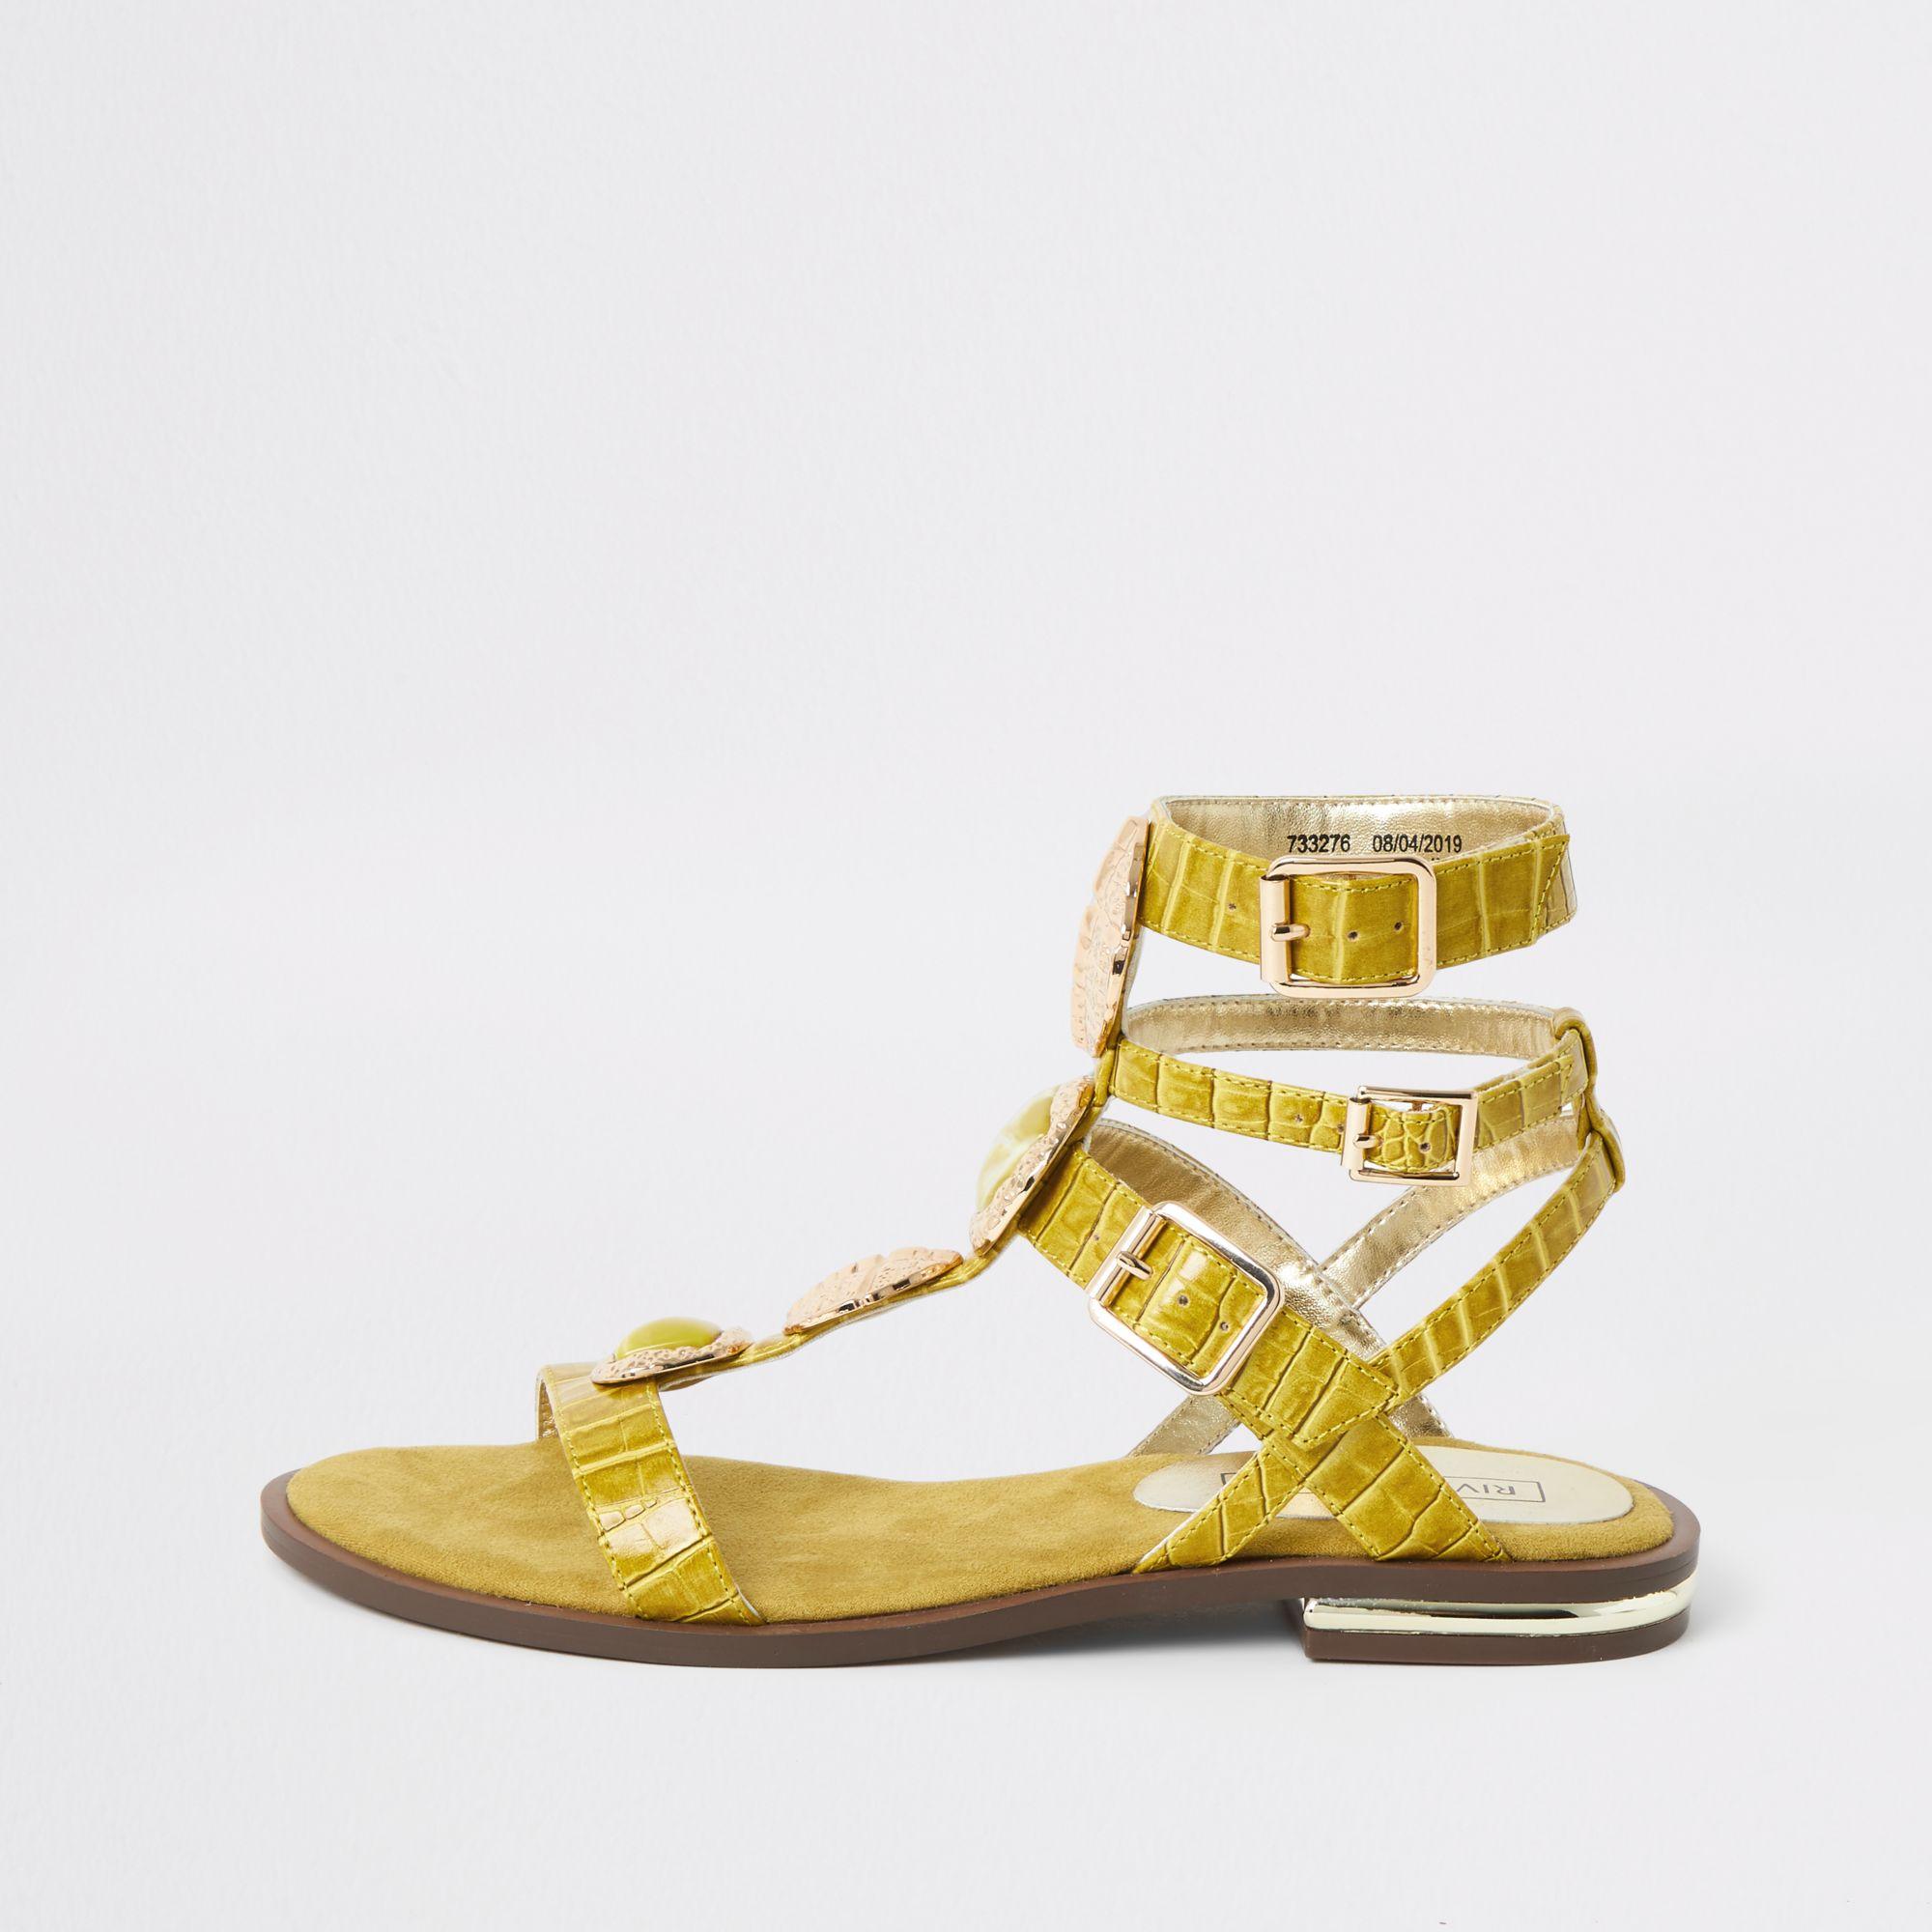 River Island Gem Gladiator  Sandals  in Yellow  Lyst